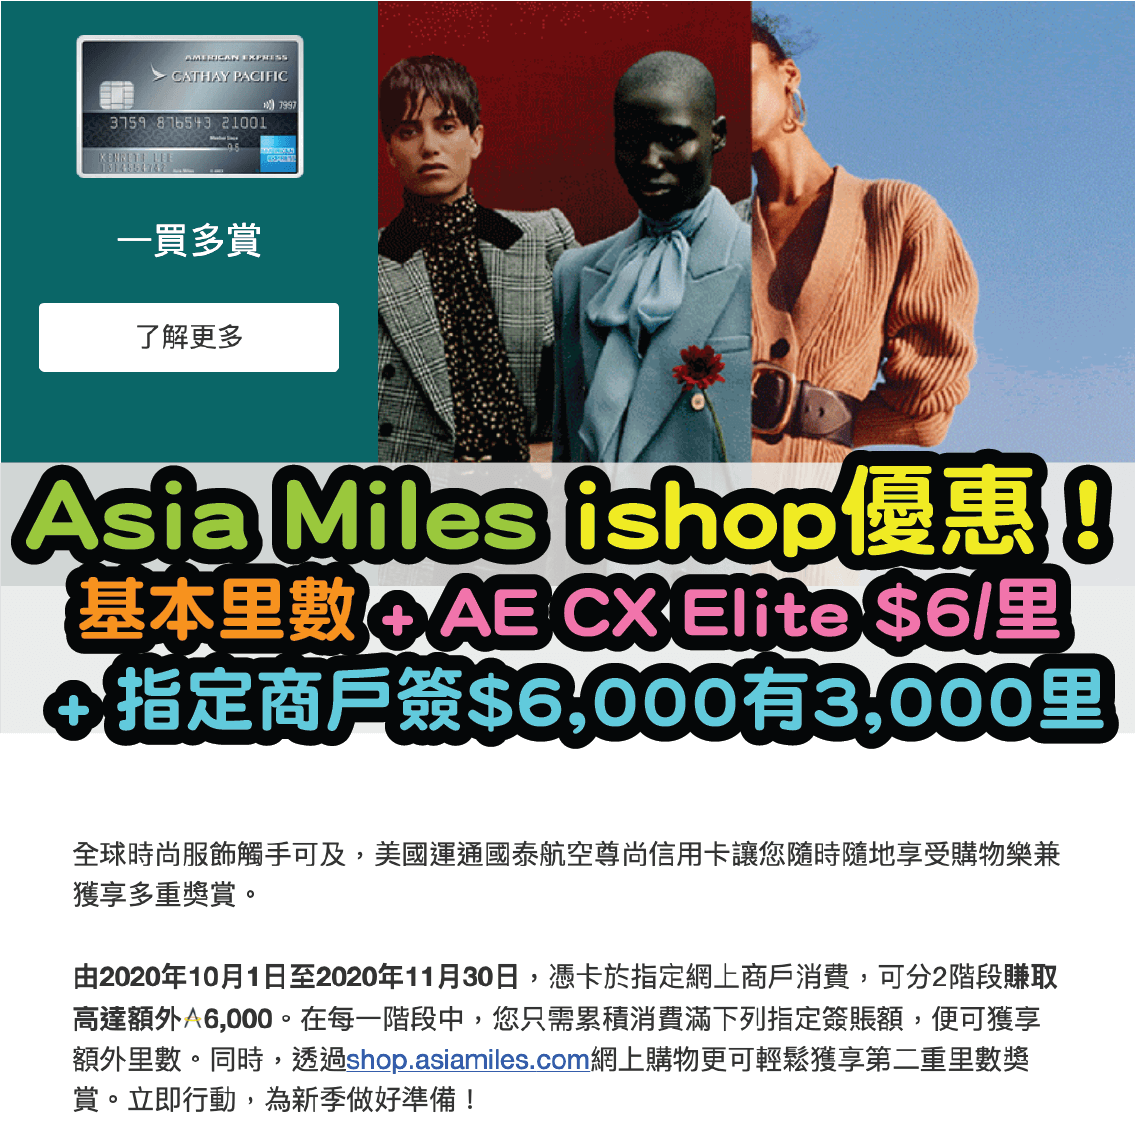 【Asia Miles ishop優惠】一個消費3重獎賞！基本里數 + AE CX Elite $6/里 + 指定商戶簽HKD6,000有3,000里